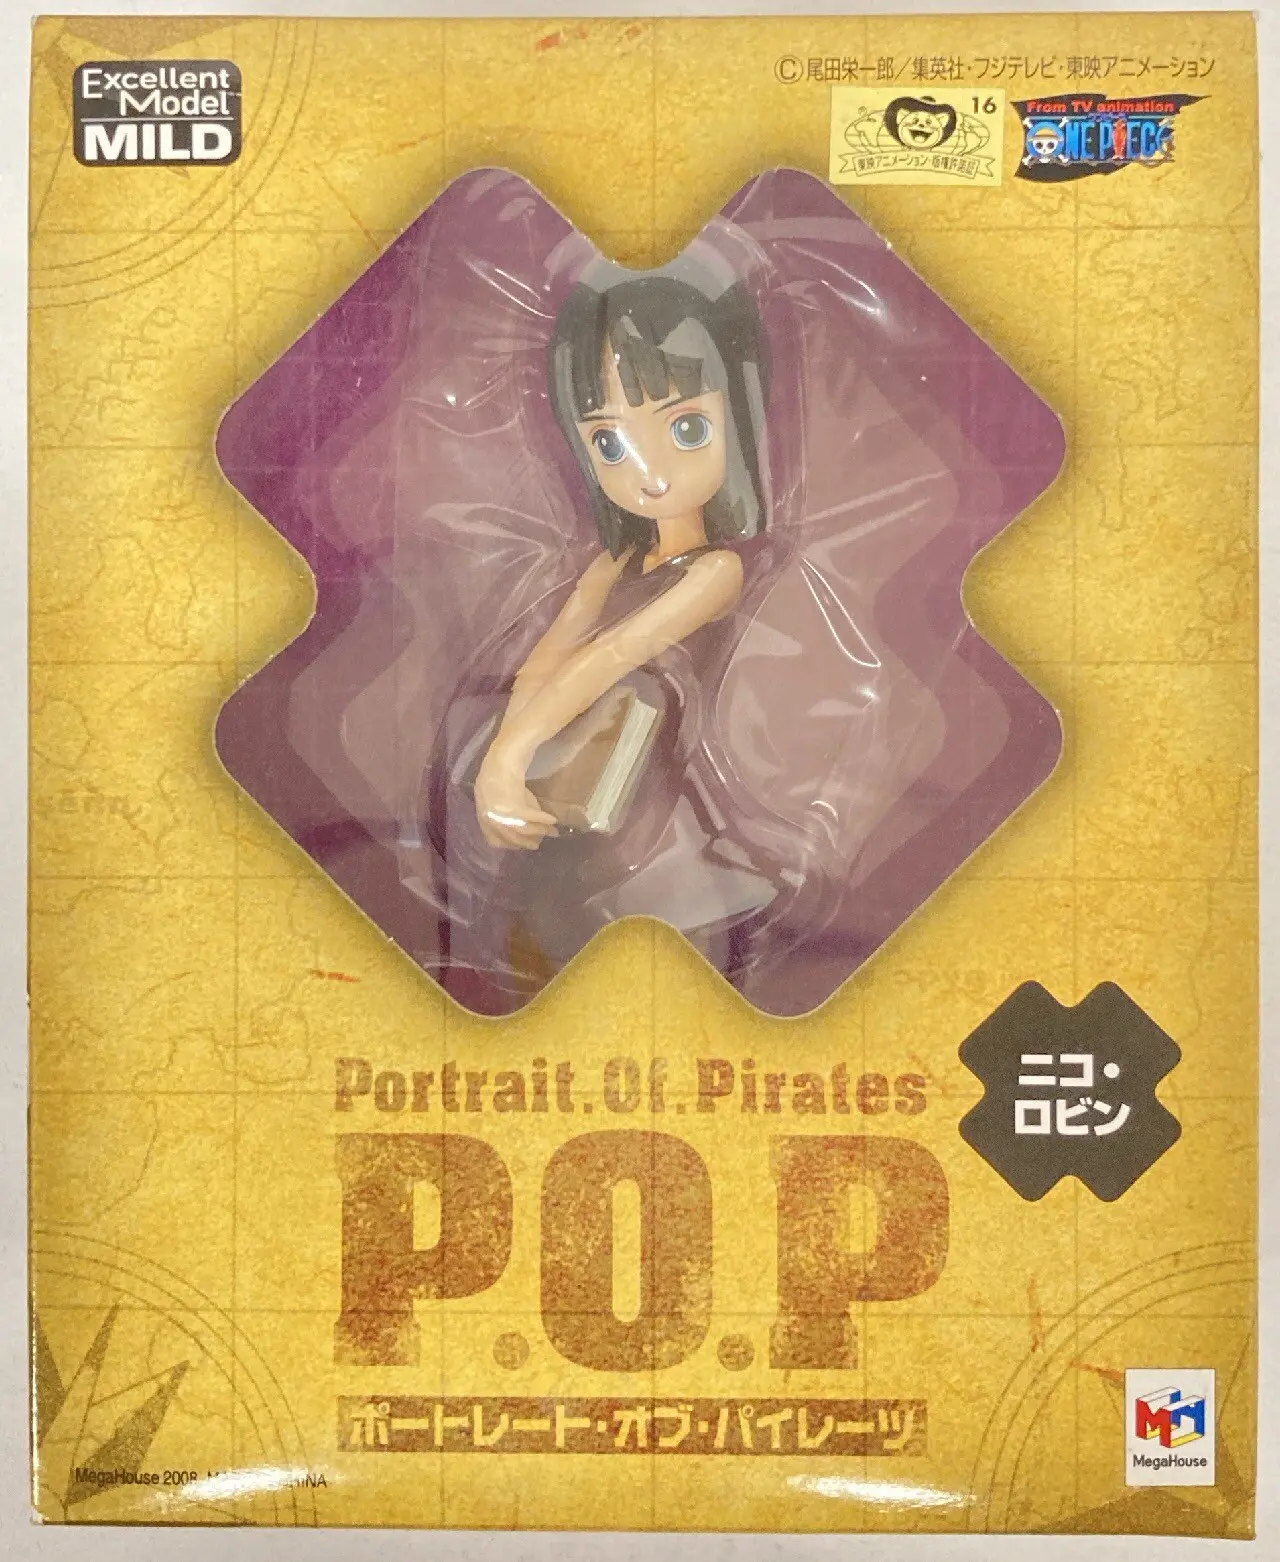 P.O.P (Portrait.Of.Pirates) - One Piece / Nico Robin